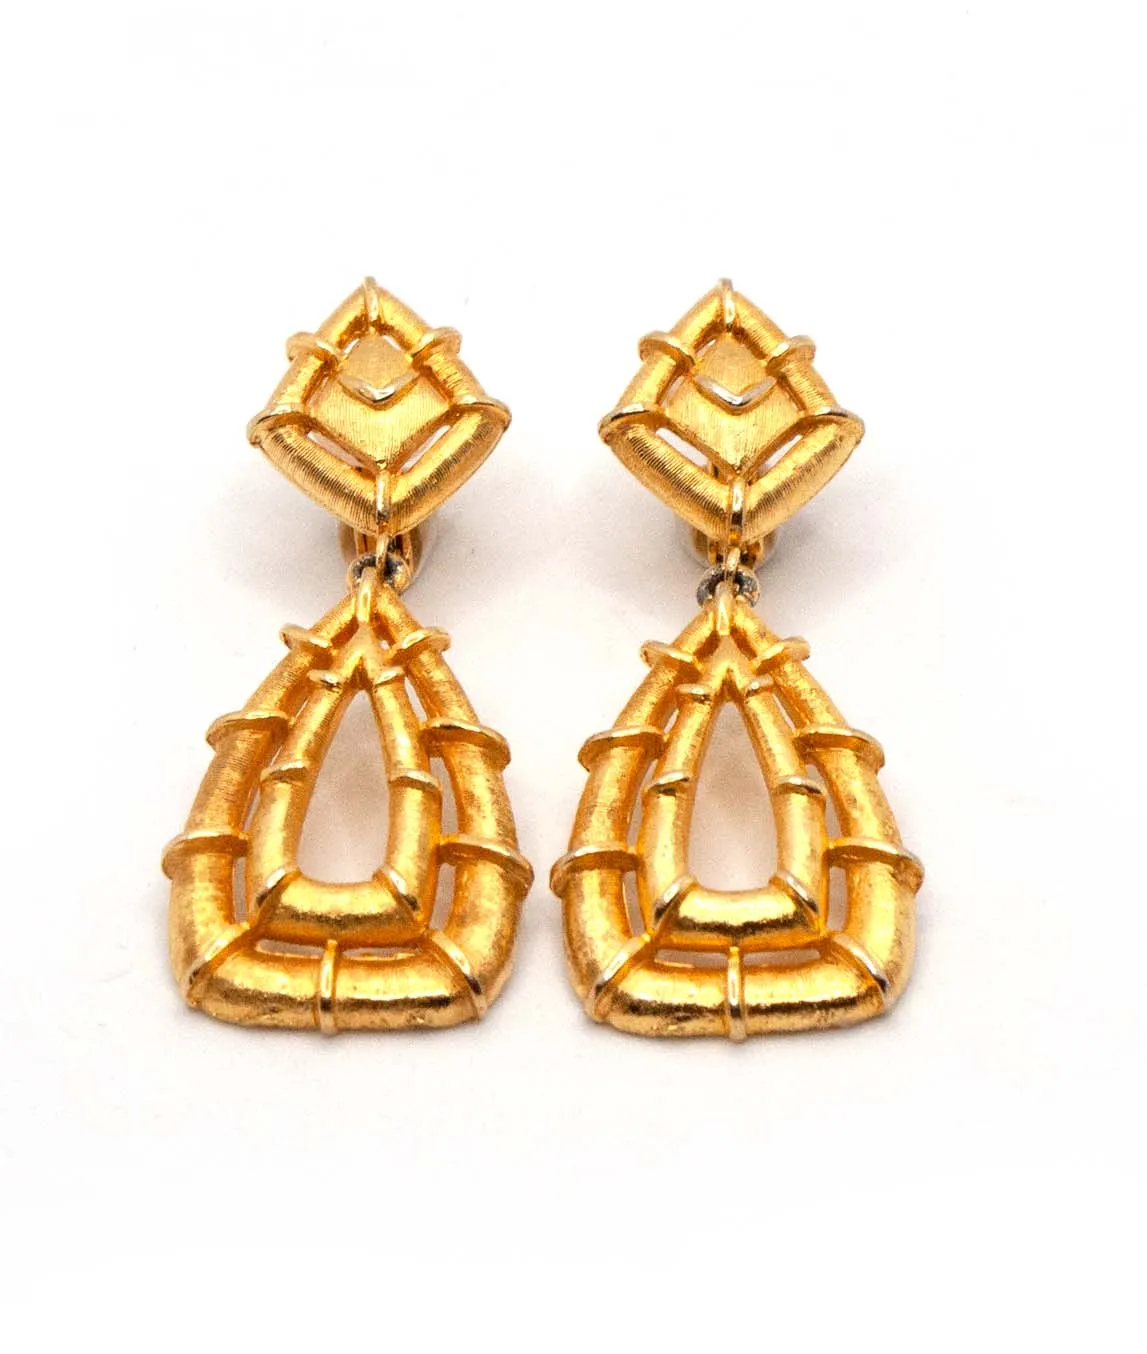 Gold bamboo earrings by Polcini